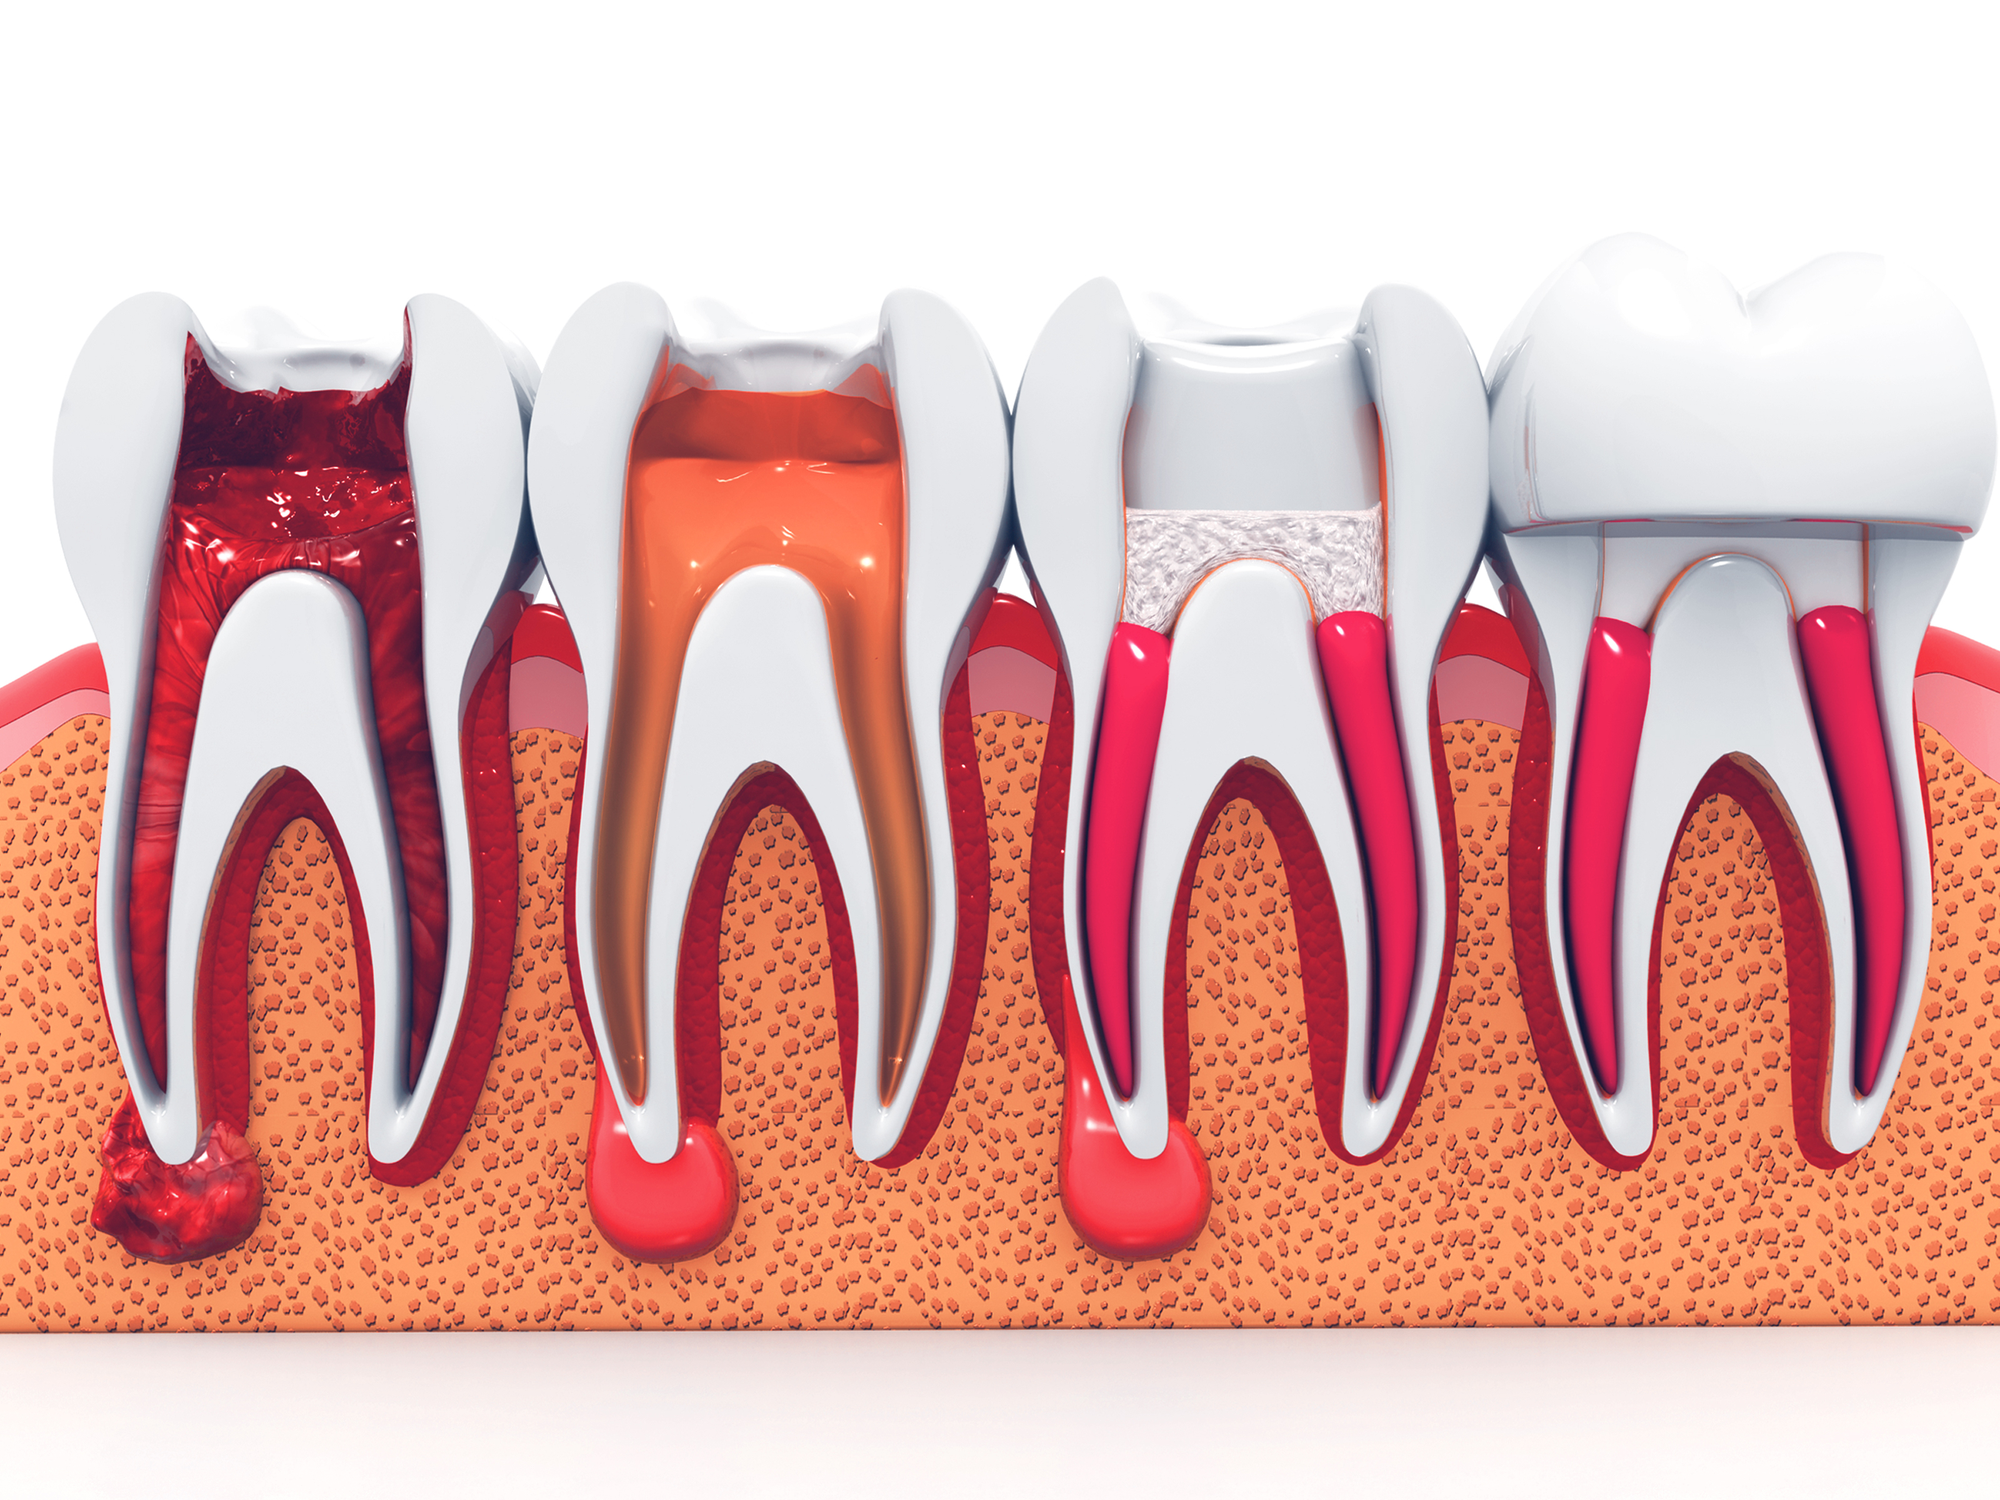 علائم پوسیدگی ریشه دندان